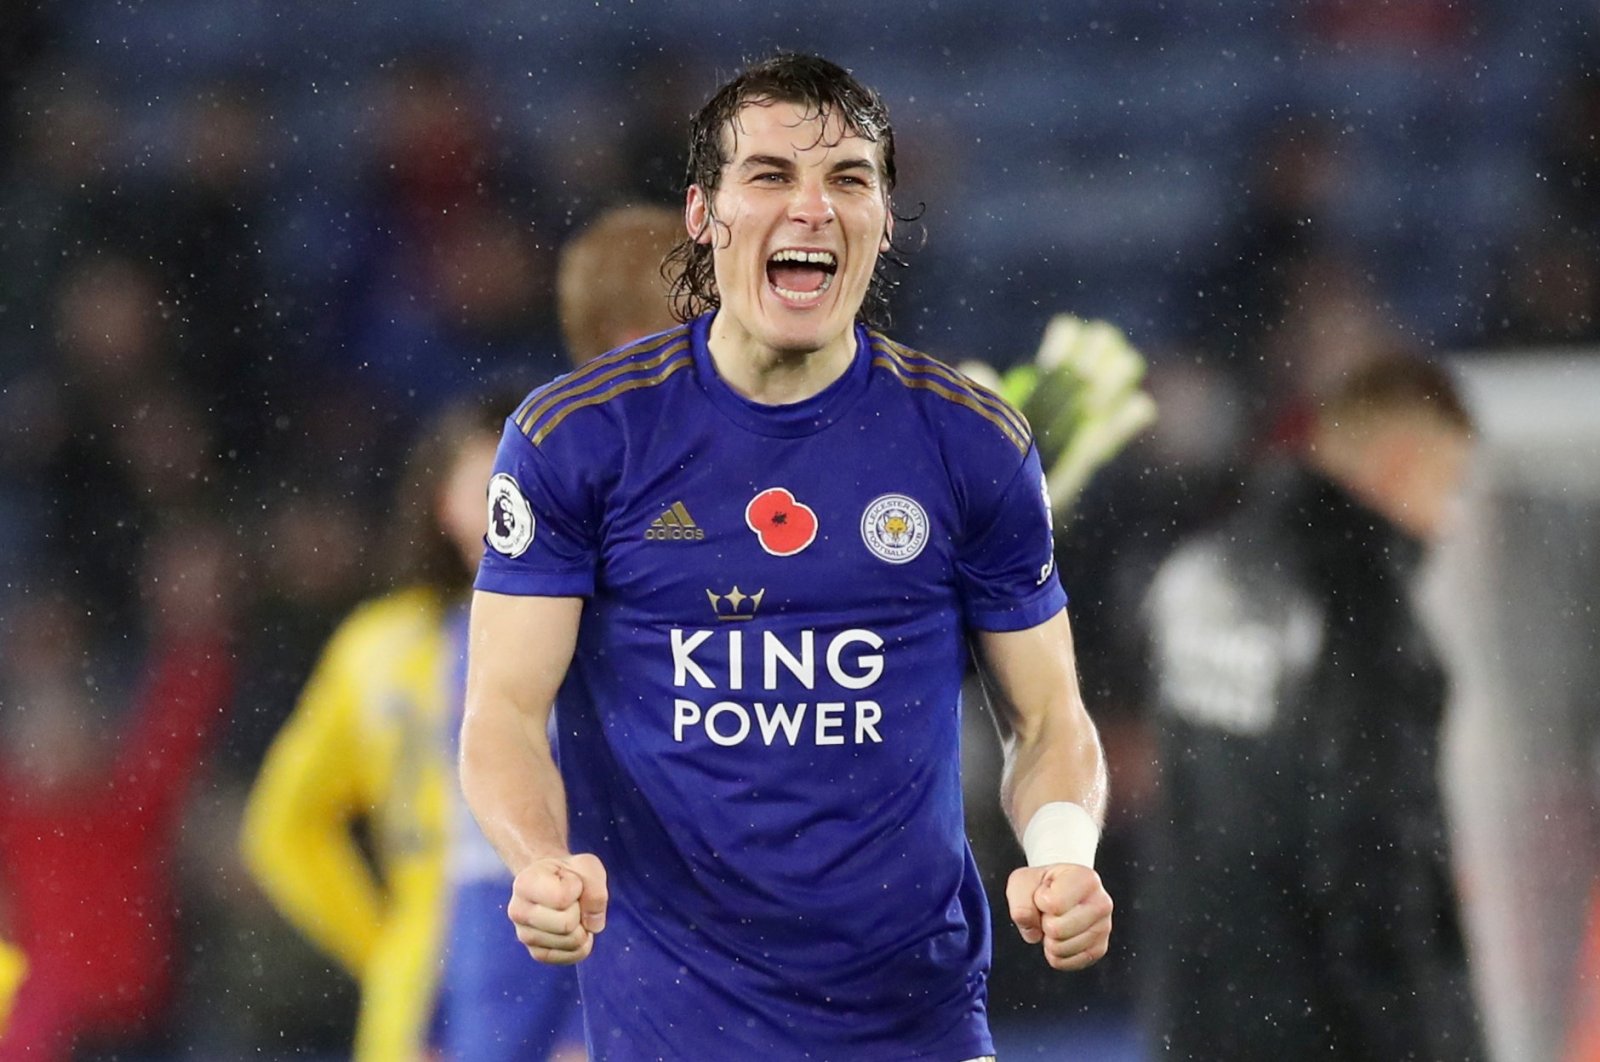 Leicester City's Çağlar Söyüncü celebrates after a match against Arsenal, at King Power Stadium, Leicester, the U.K. Nov. 9, 2019. (Reuters Photo)